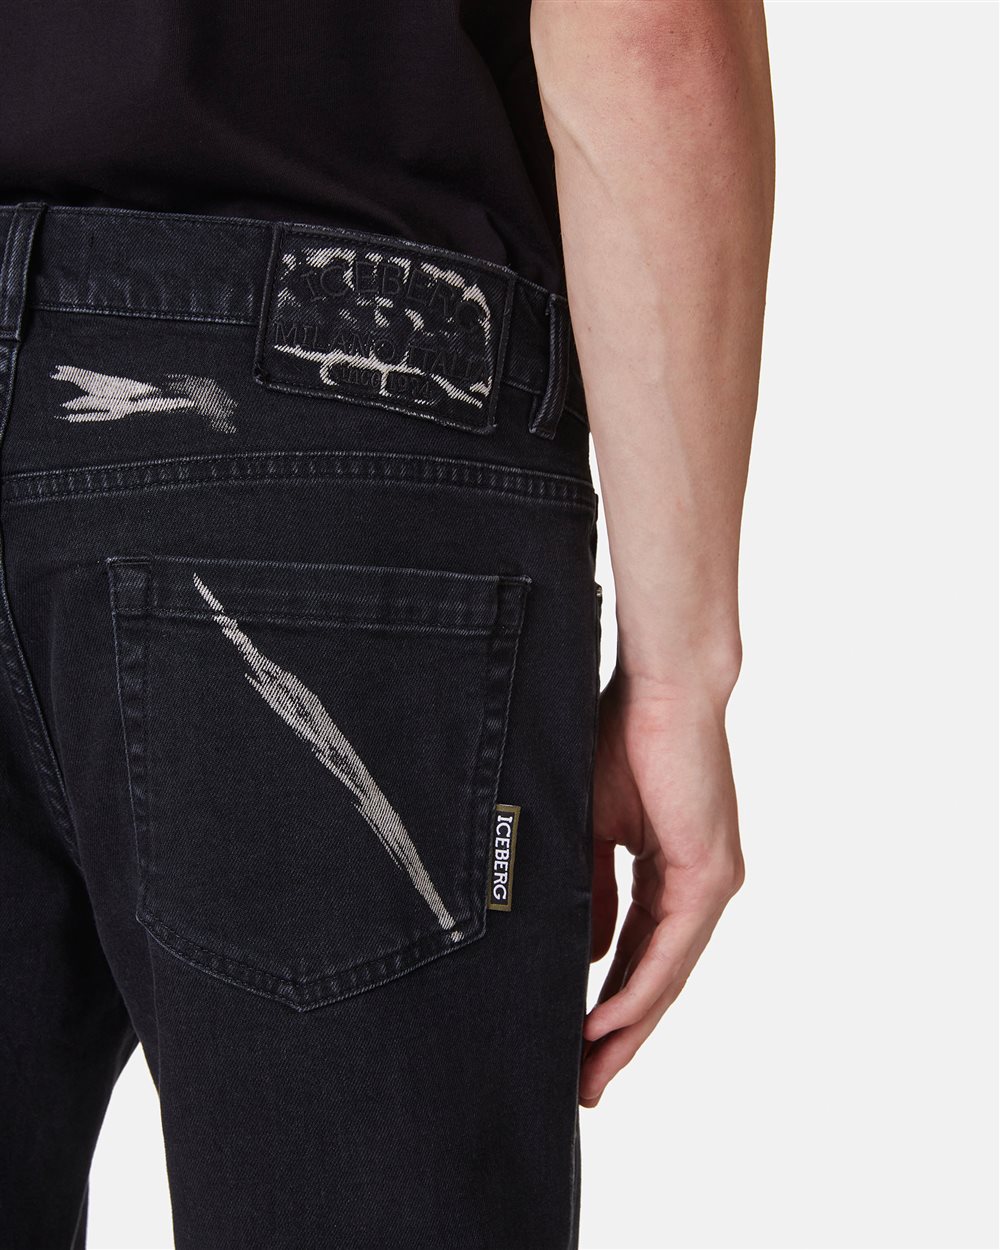 5 pocket jeans with logo - Iceberg - Official Website